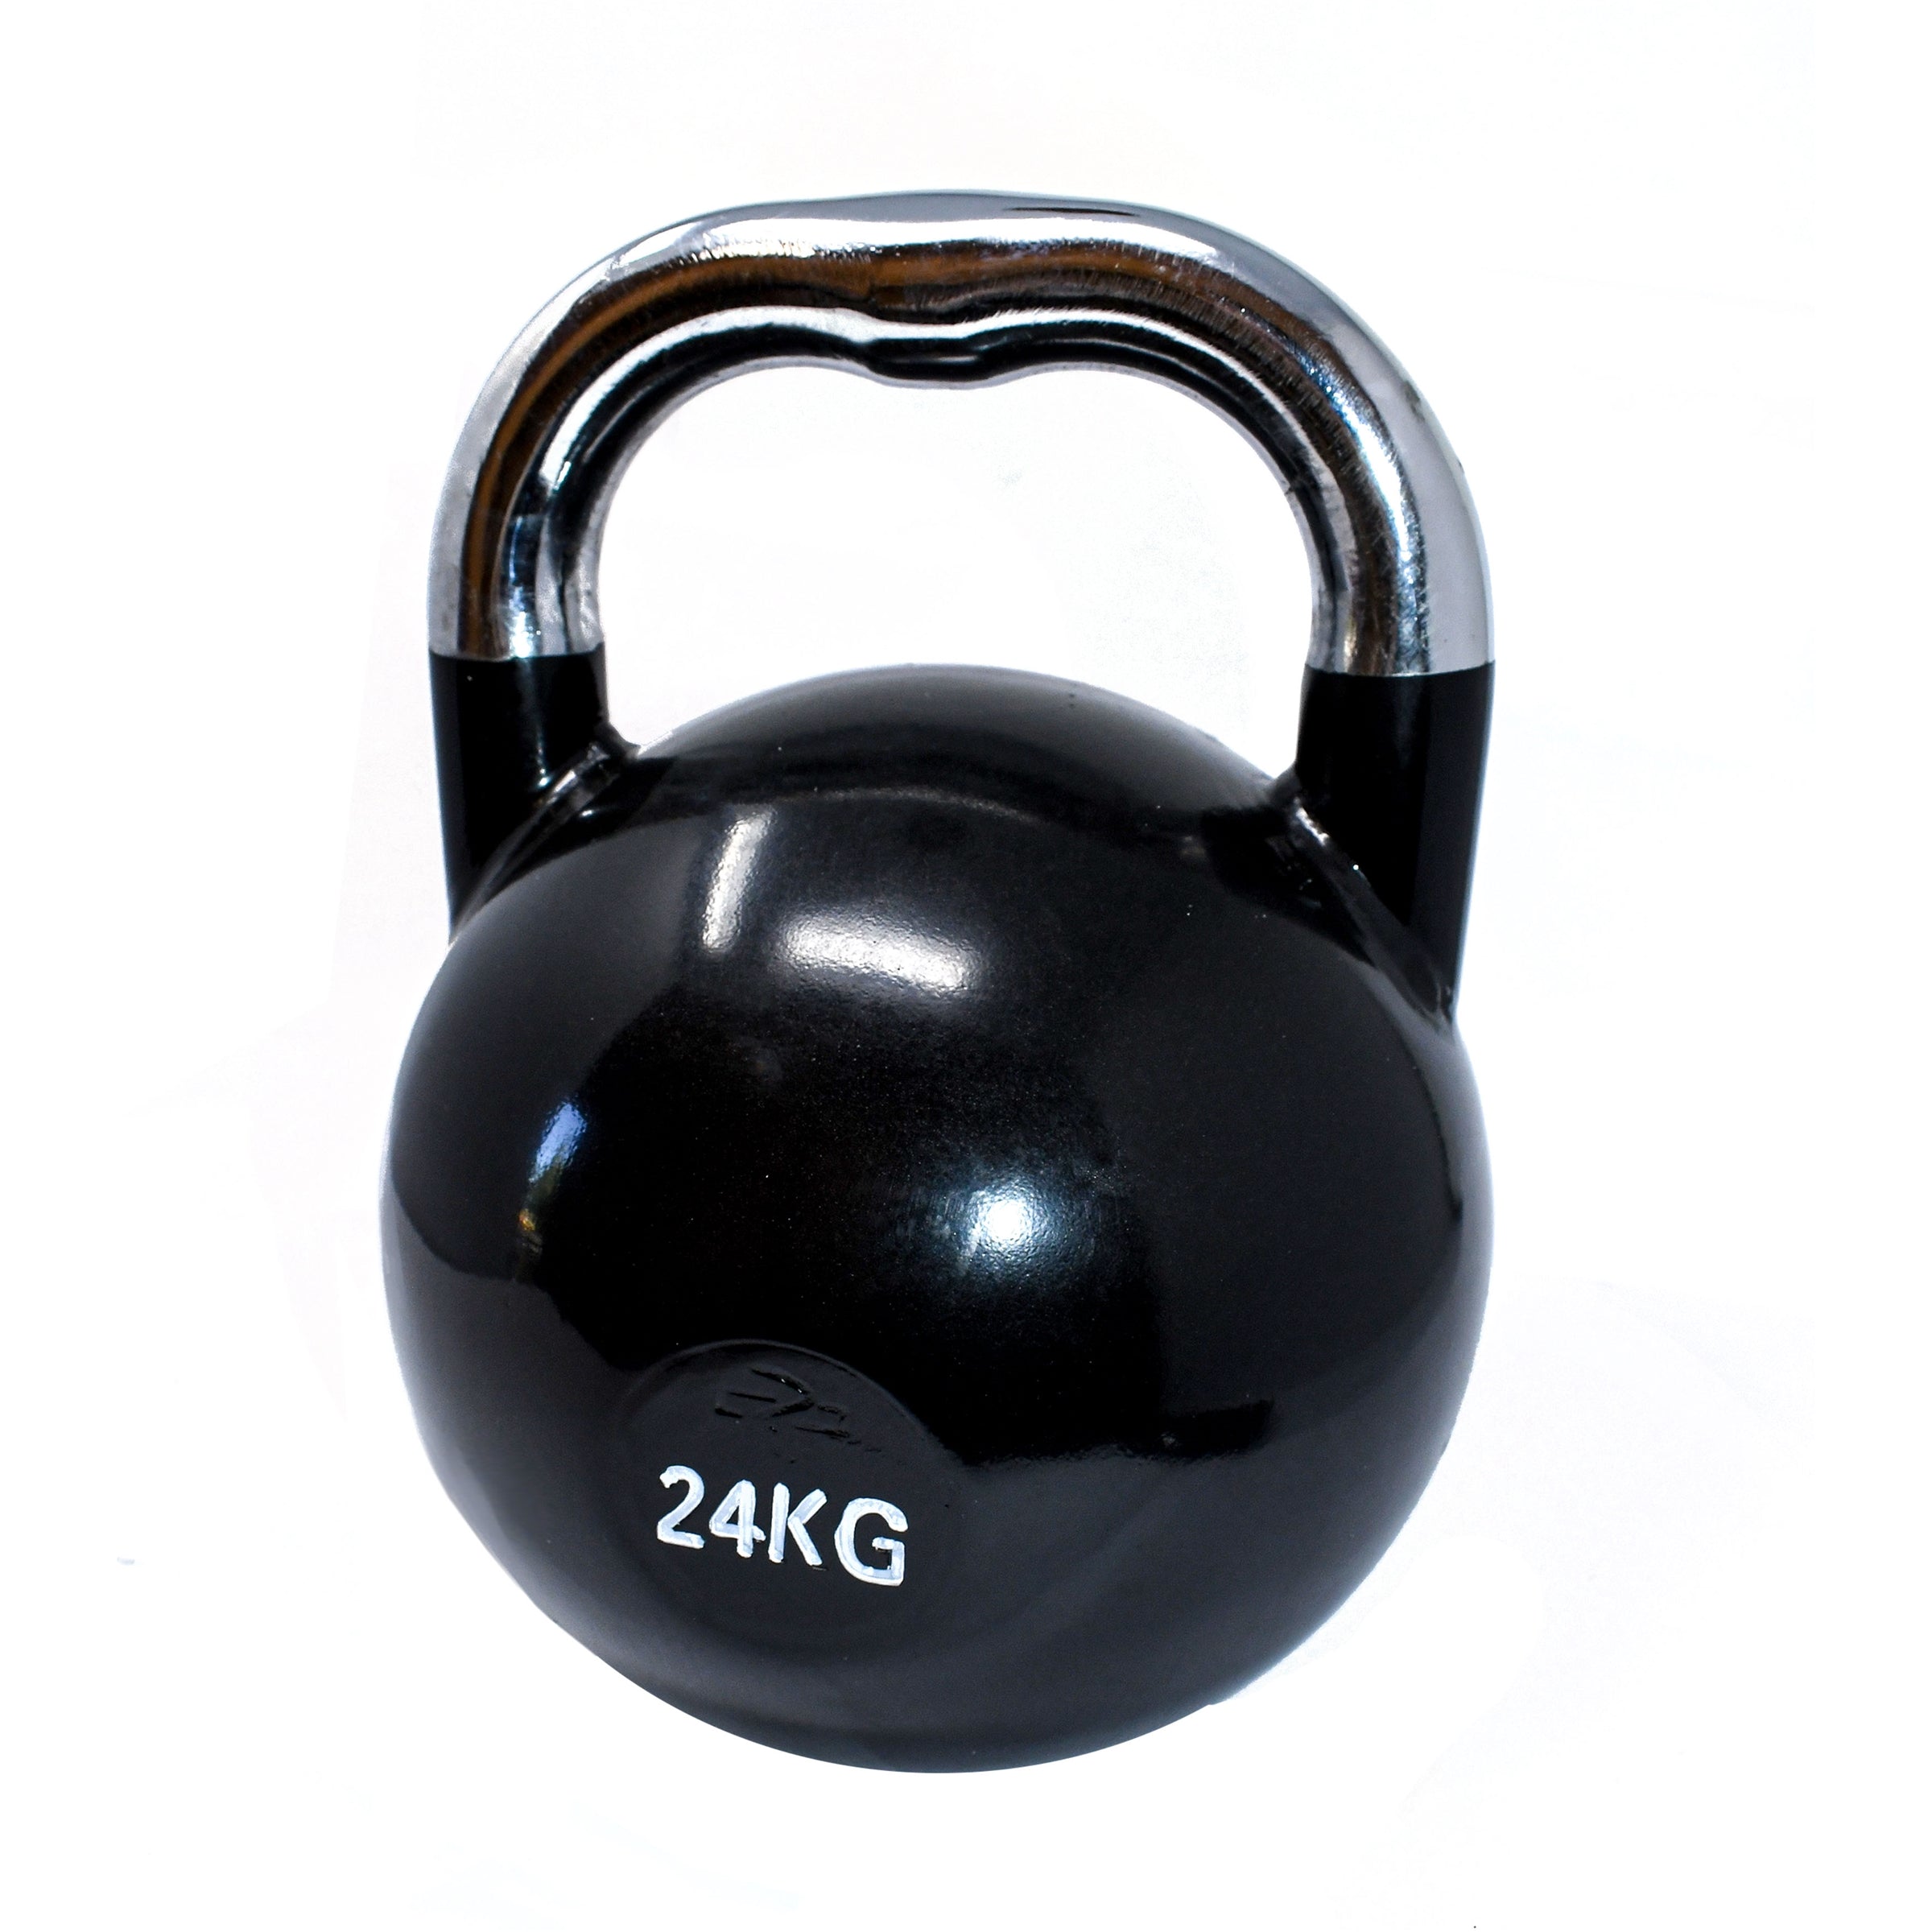 Premium Coated Steel Kettlebell - 53 lbs (24 kg) - Black